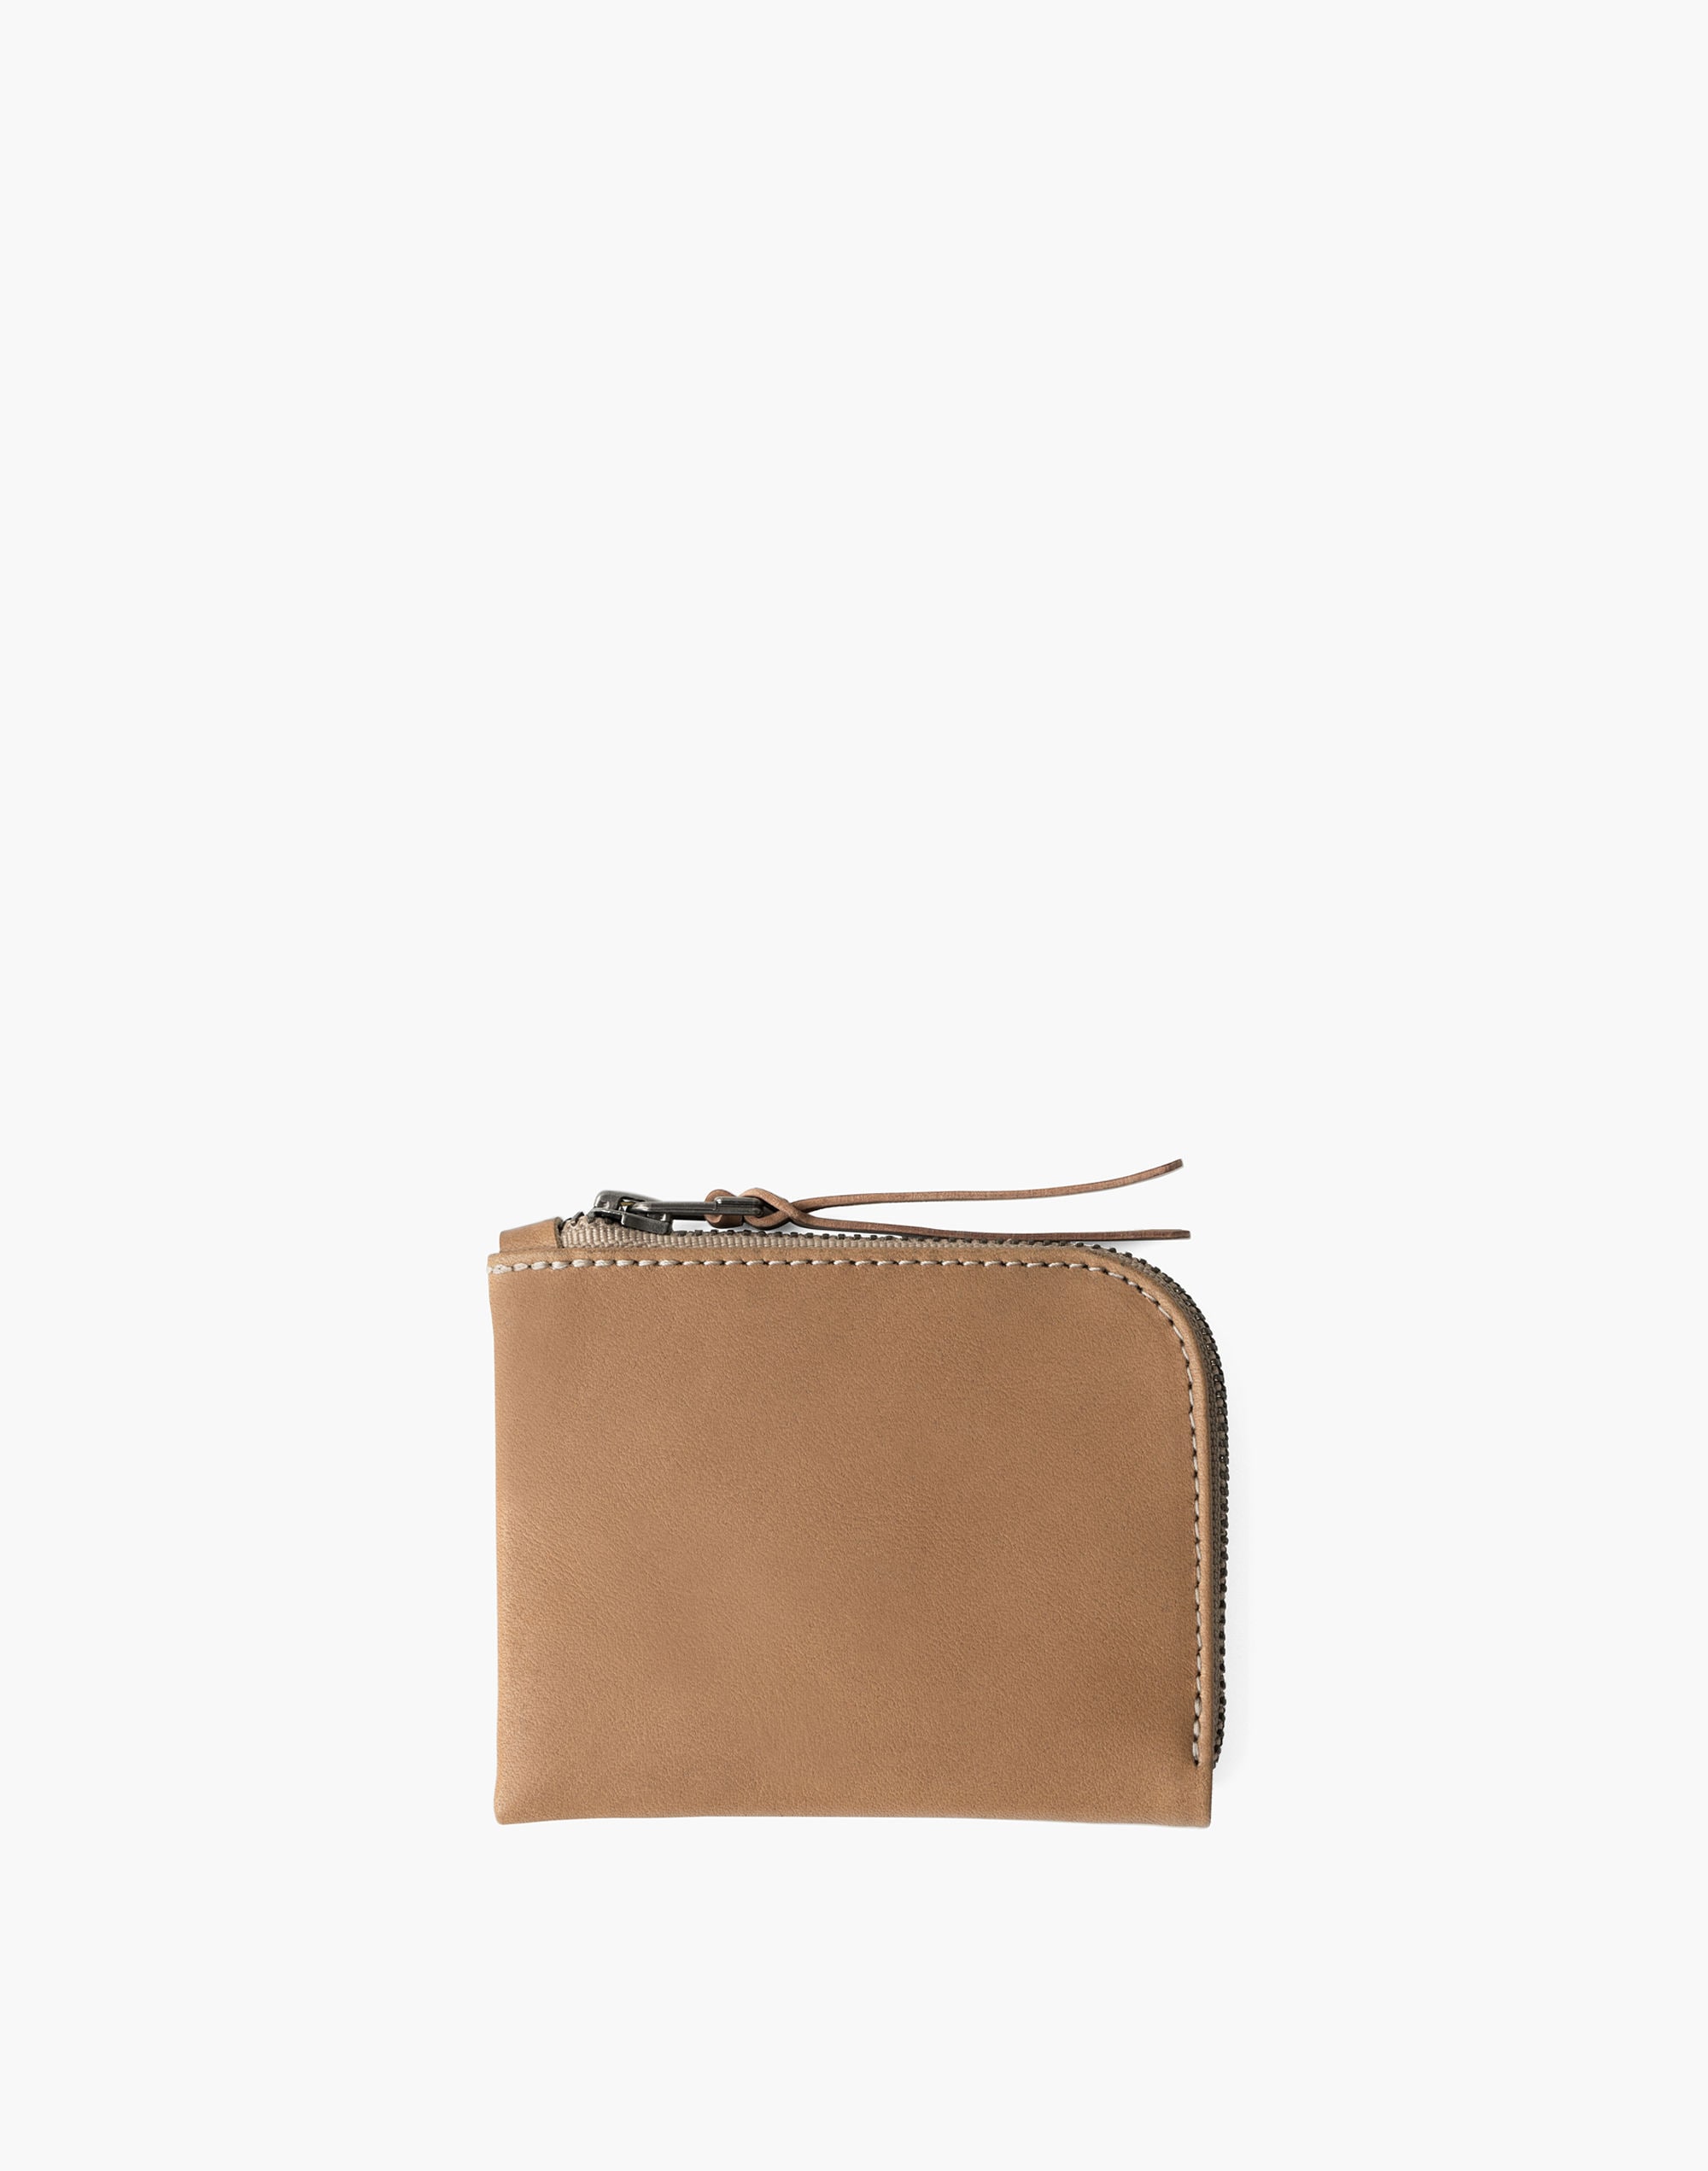 Mw Makr Leather Zip Luxe Wallet In Brown